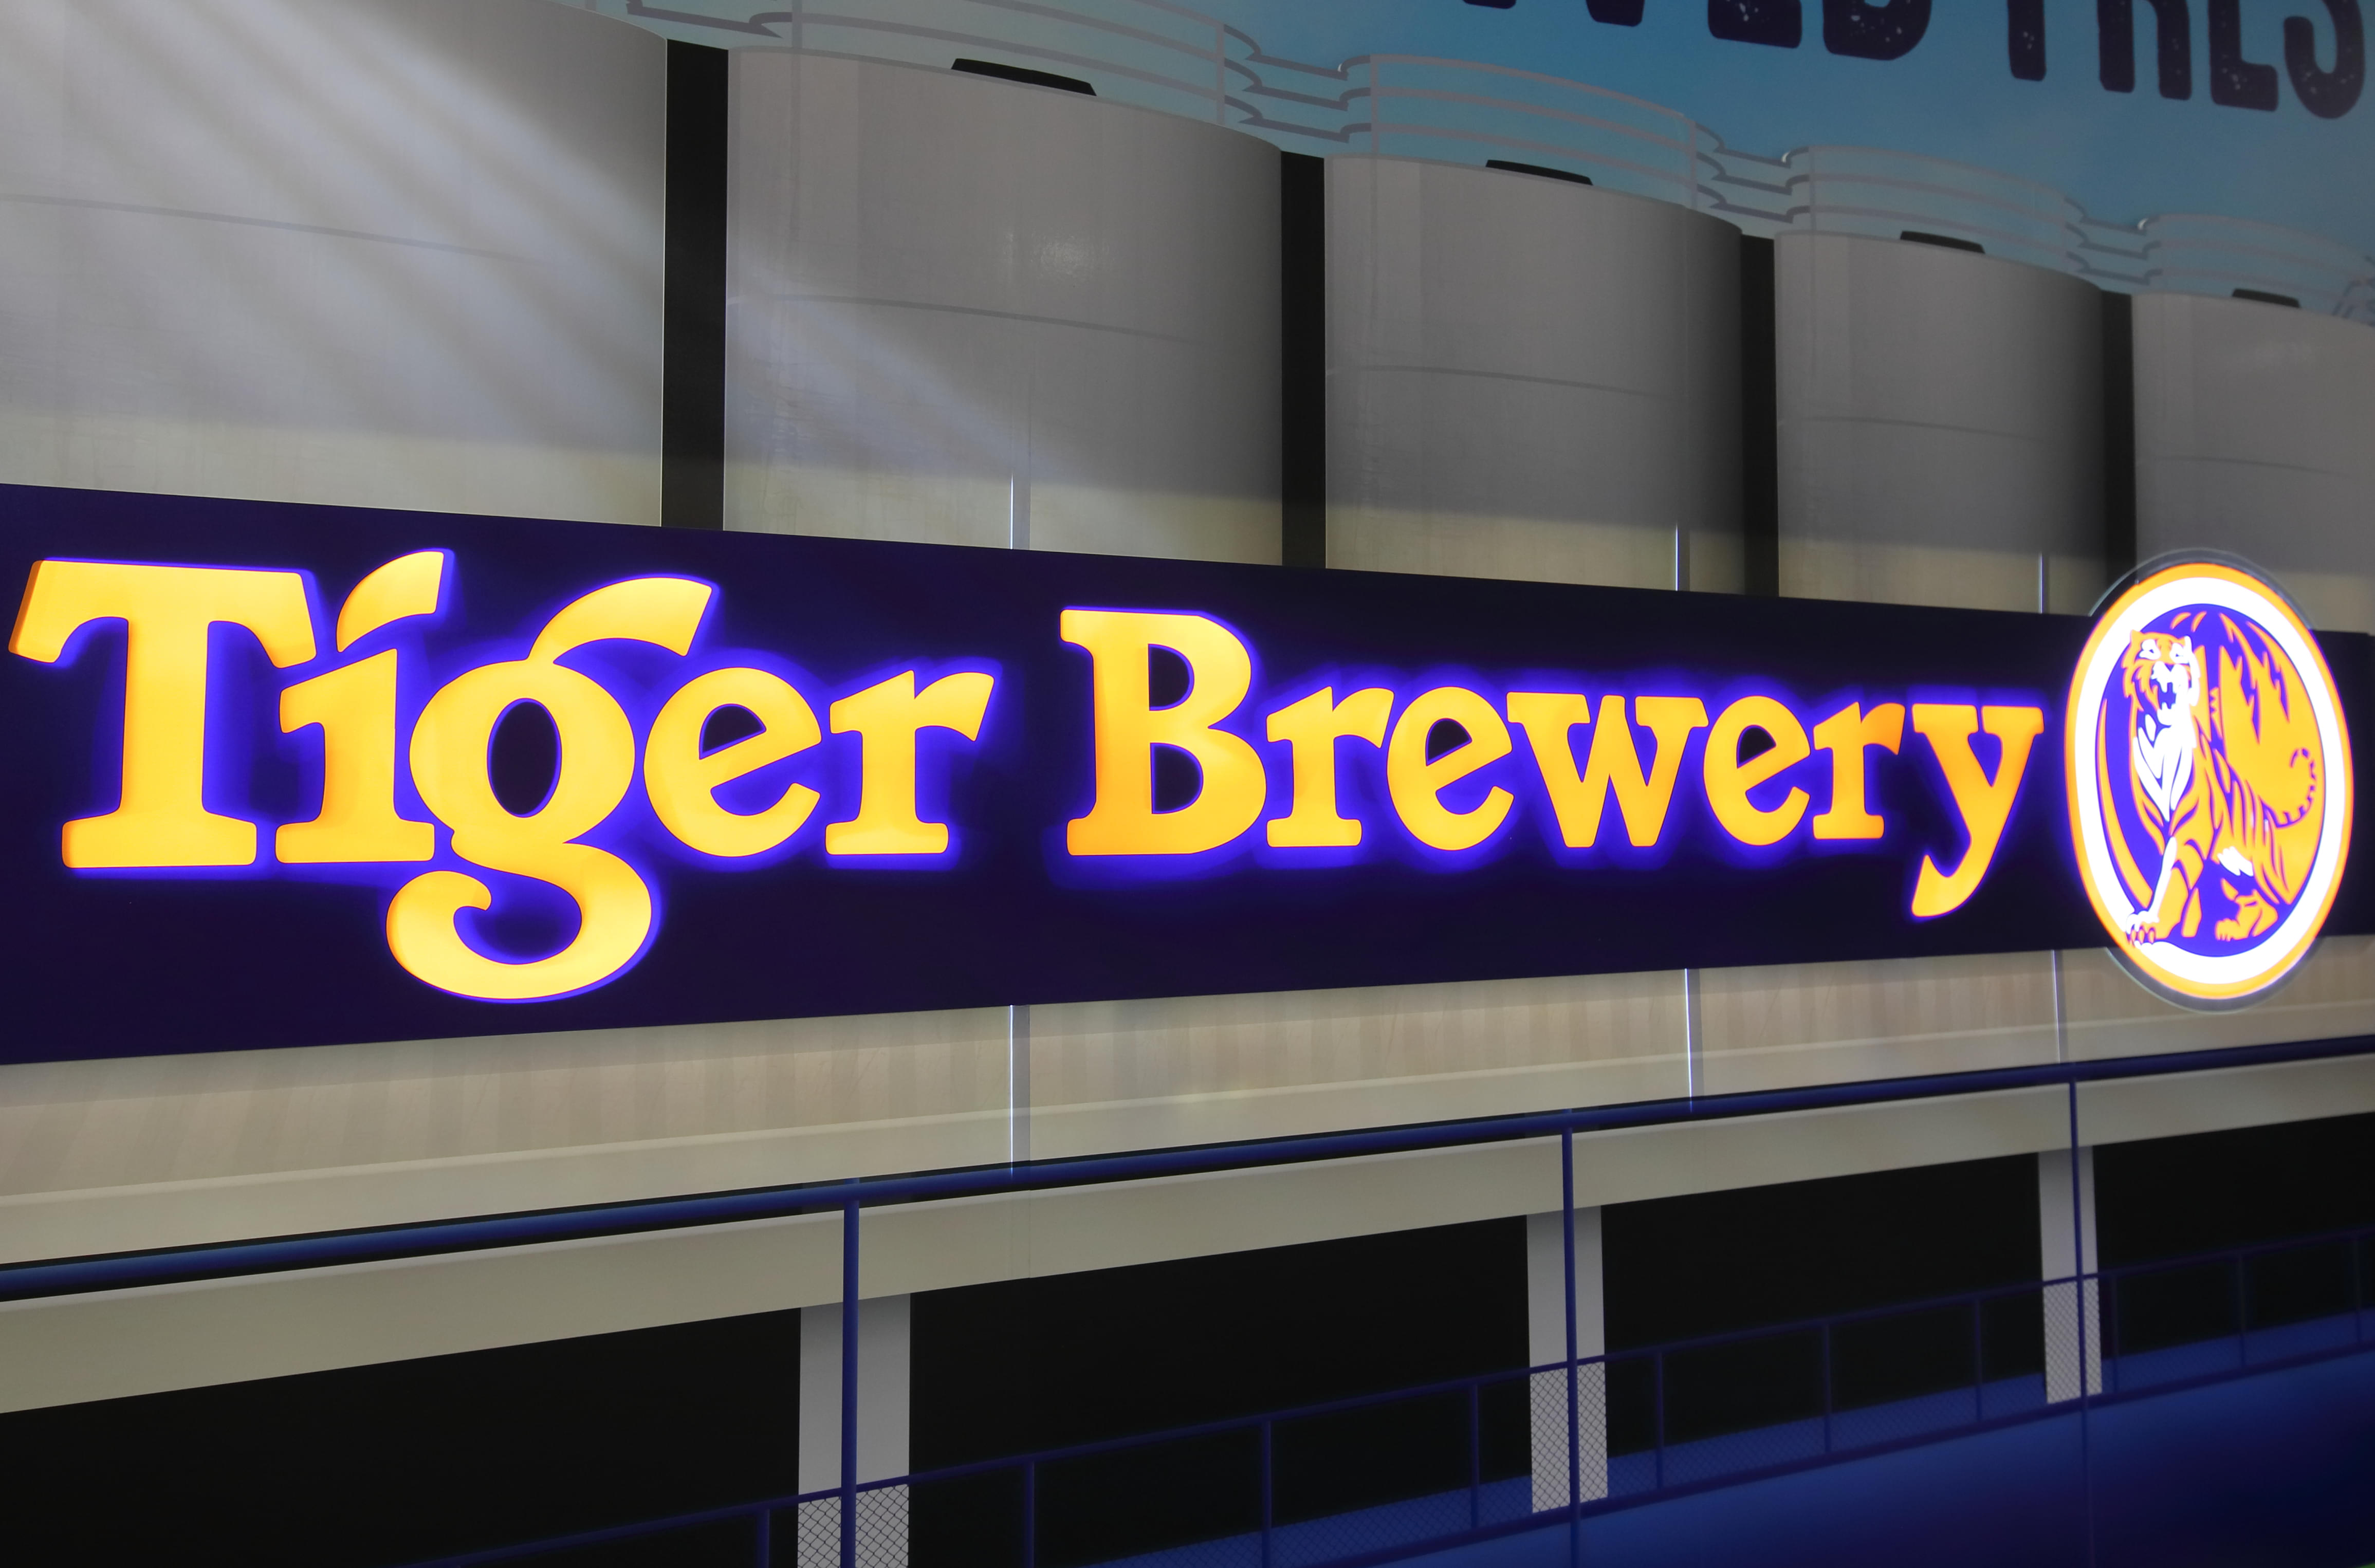 tiger brewery tour singapore